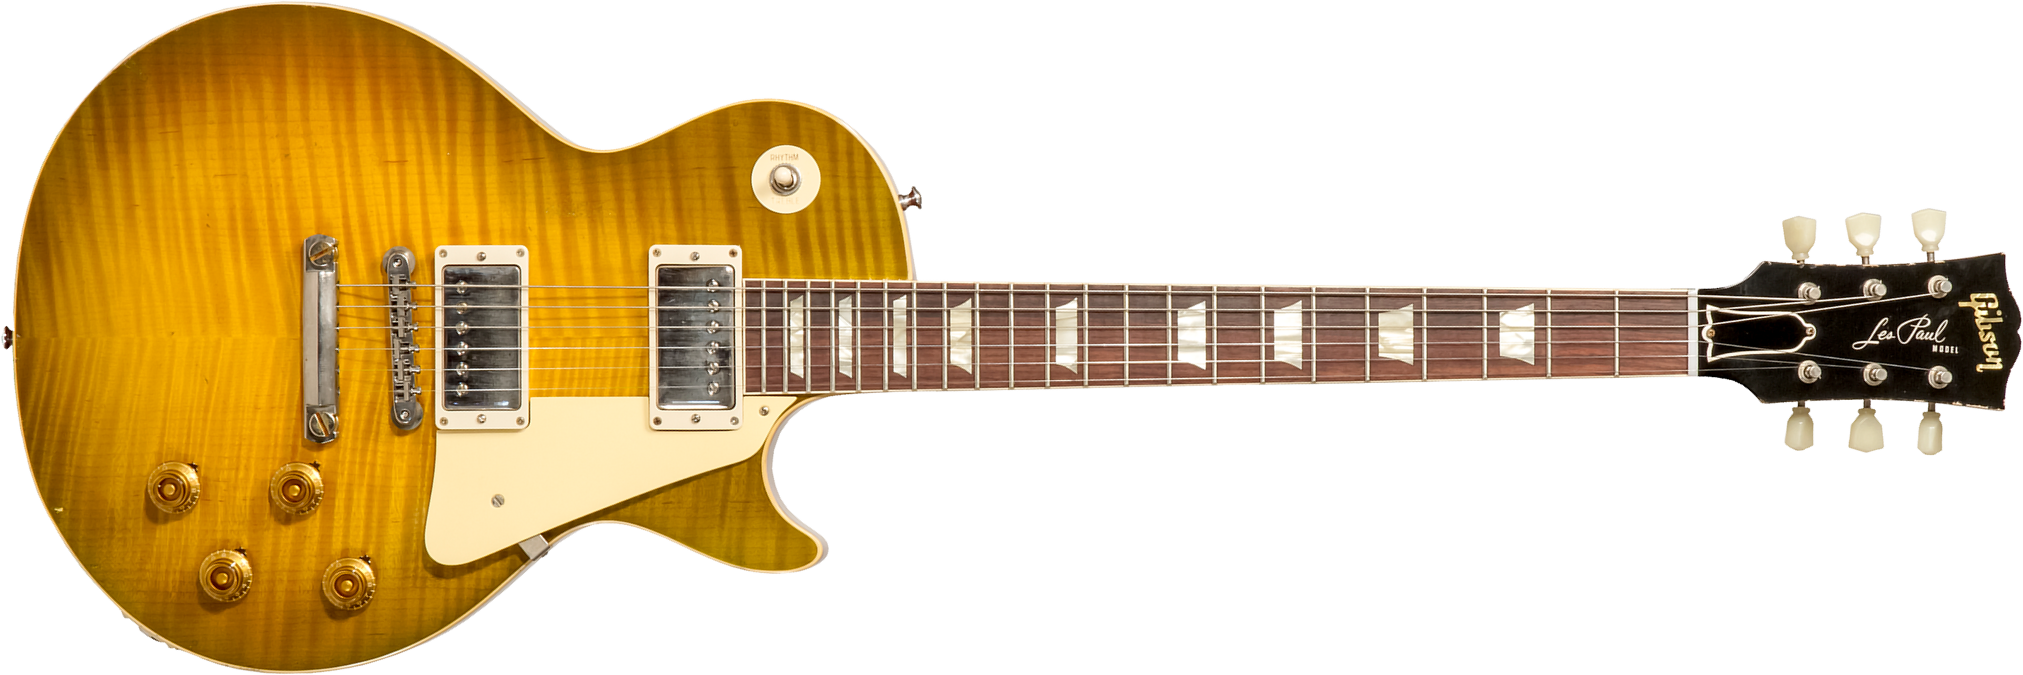 Gibson Custom Shop M2m Les Paul Standard 1959 Reissue 2h Ht Rw #932154 - Murphy Lab Light Aged Green Lemon Burst - Single cut electric guitar - Main p